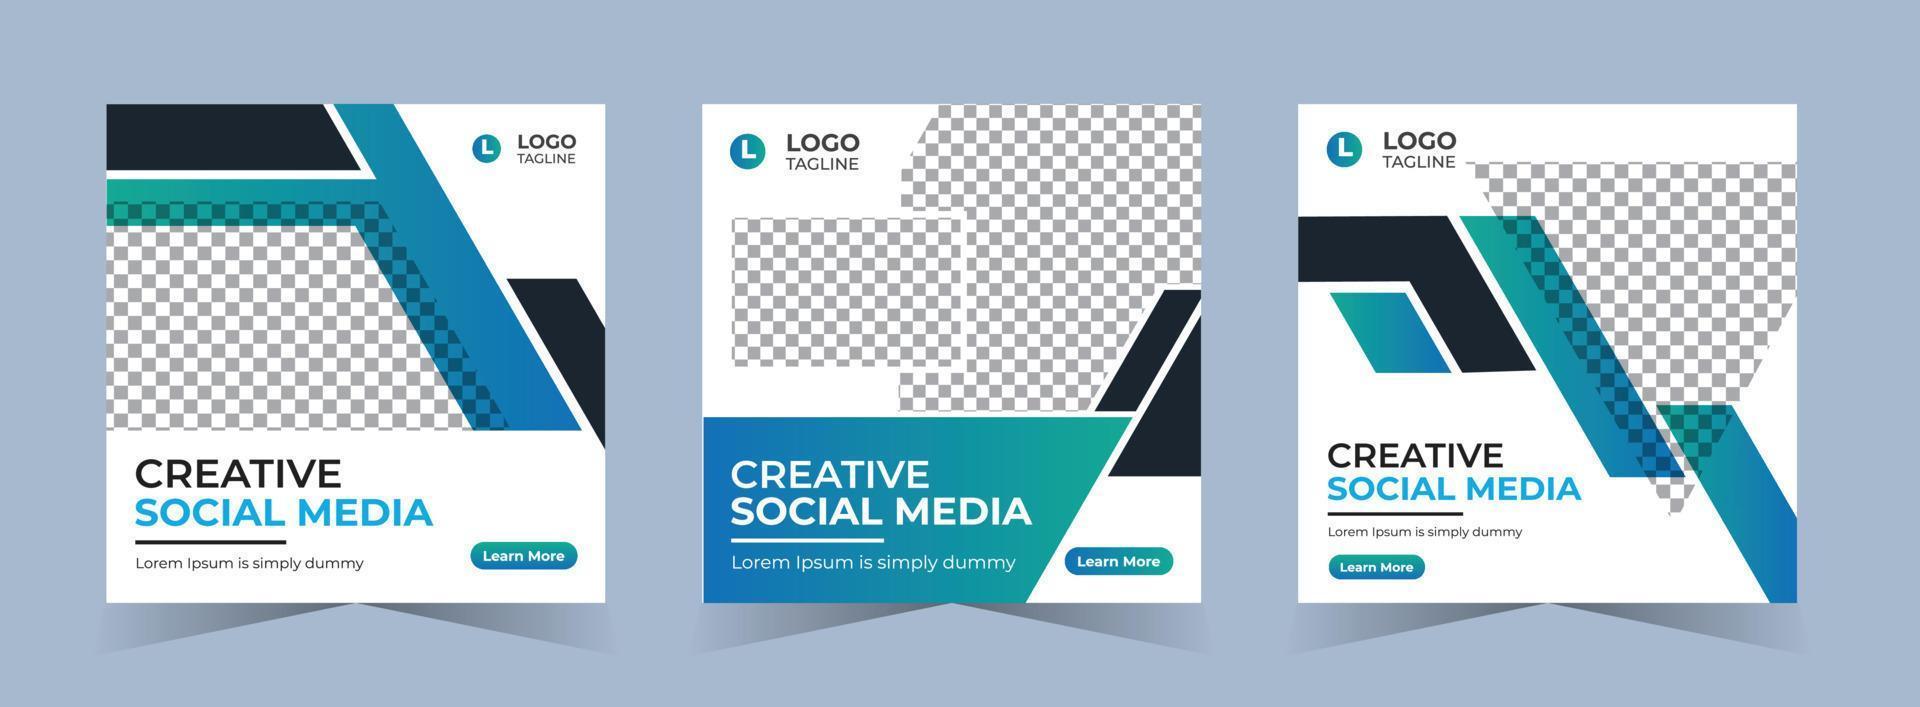 Digital marketing agency social media post and web banner template vector